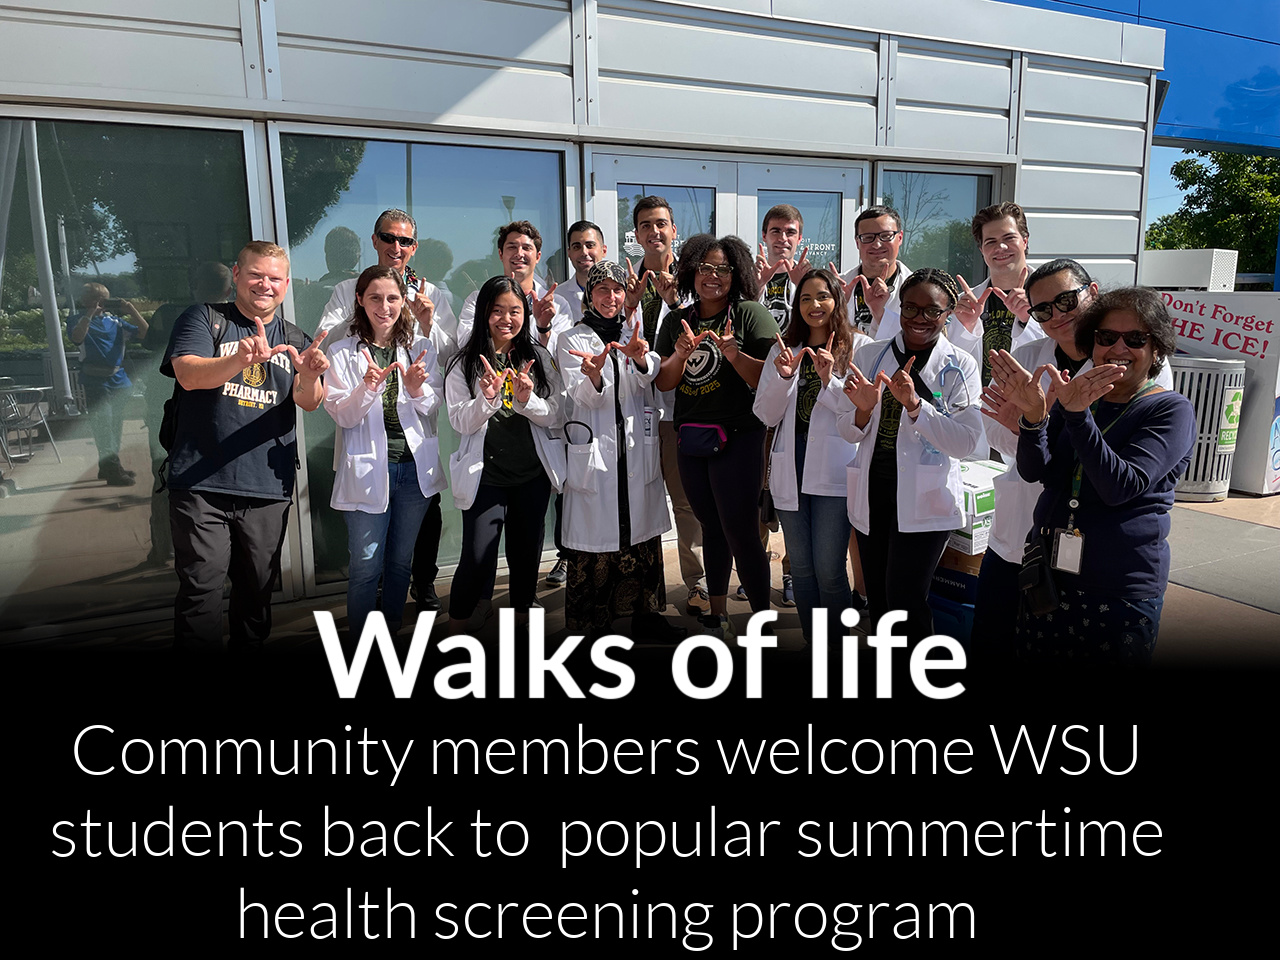 Community members welcome back Wayne State students at popular summer health screening program